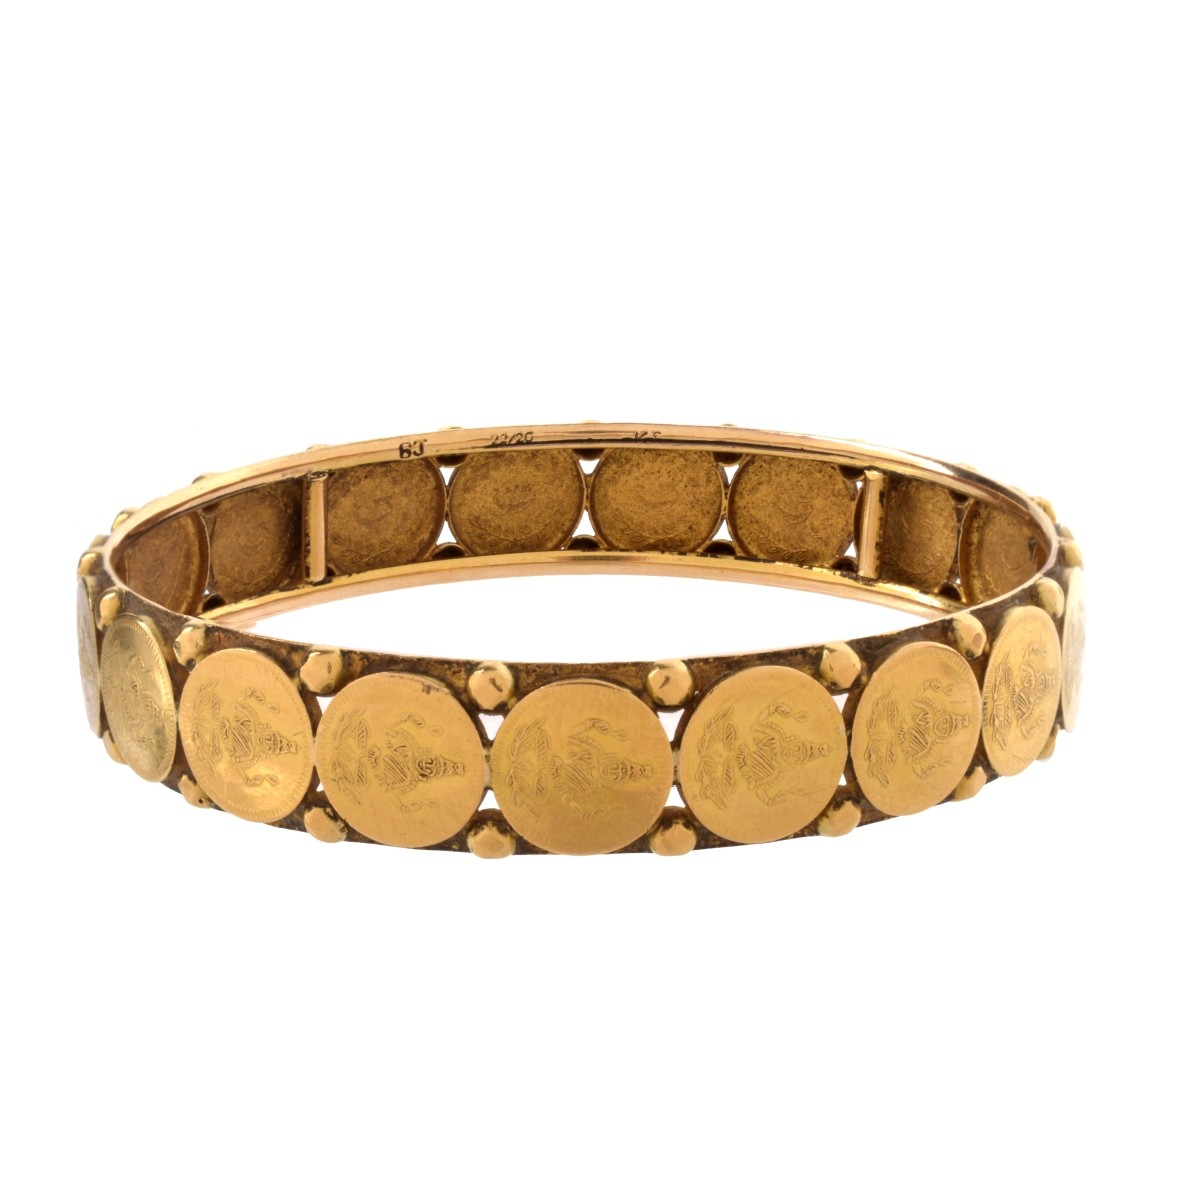 22/20K Gold "Coin" Bangle Bracelet